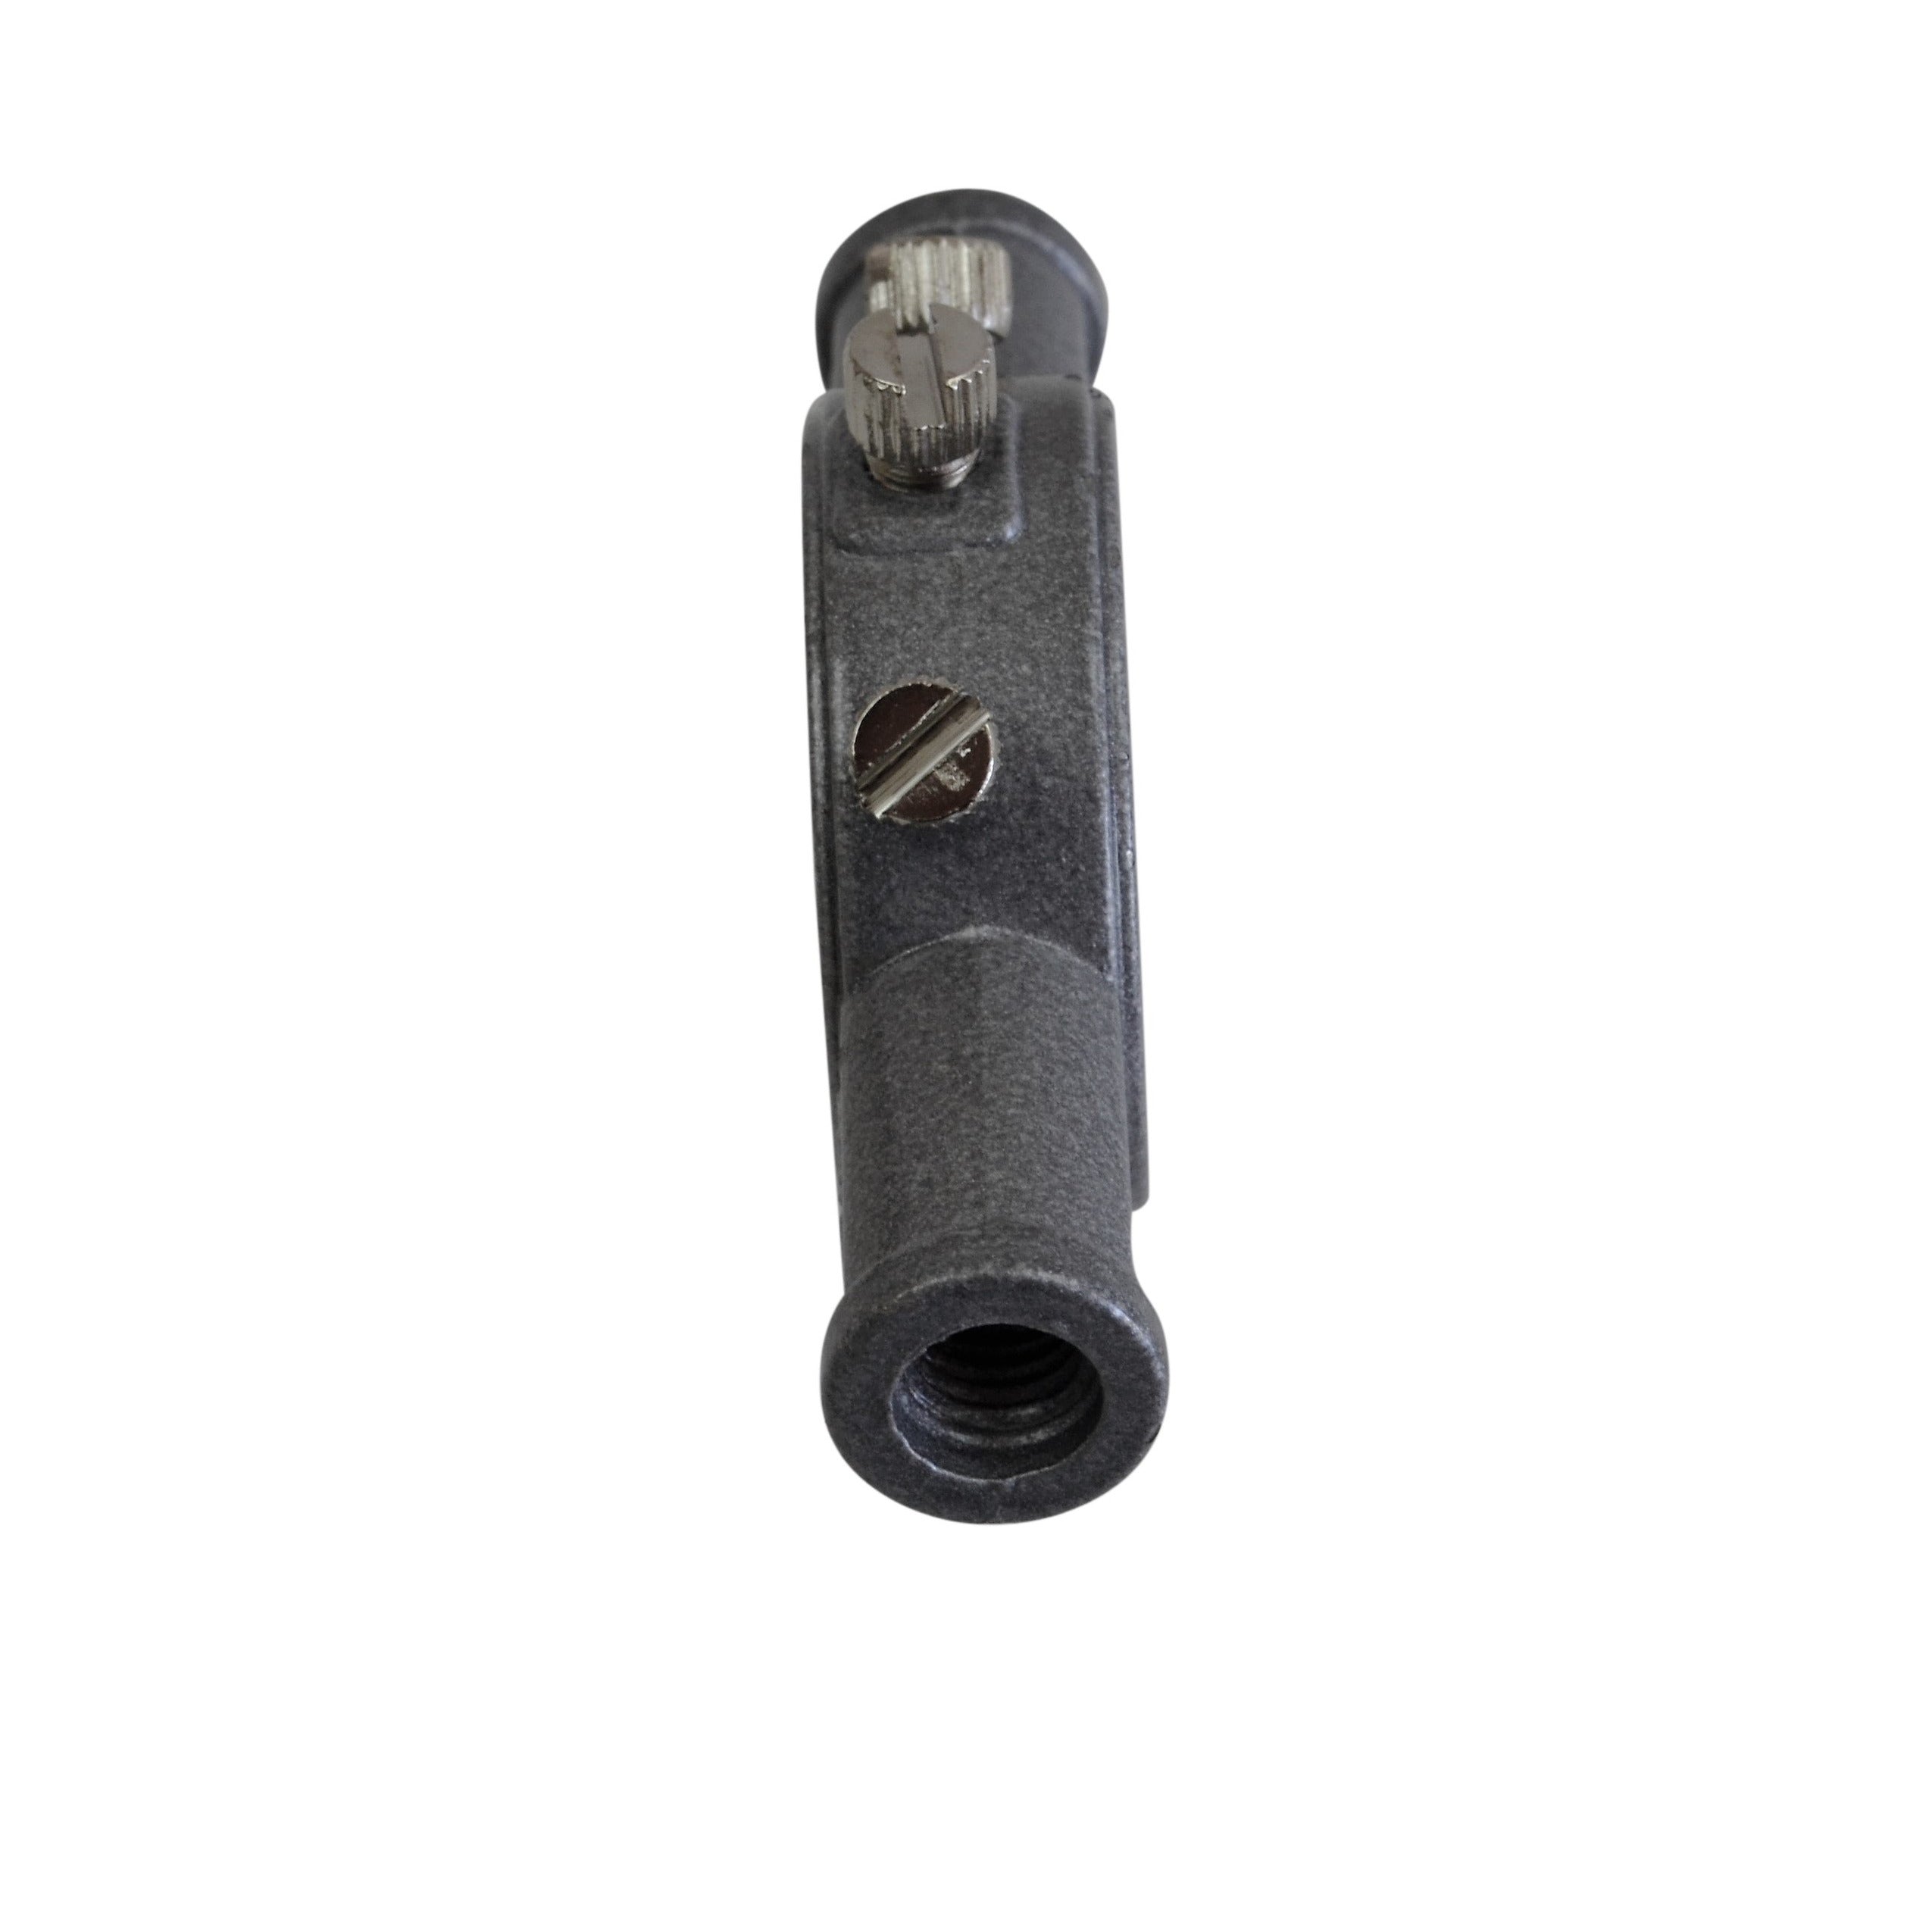 1" / 25mm Die Stock Button Dies Round Holder Tap, Wrench Handle Bar Tool